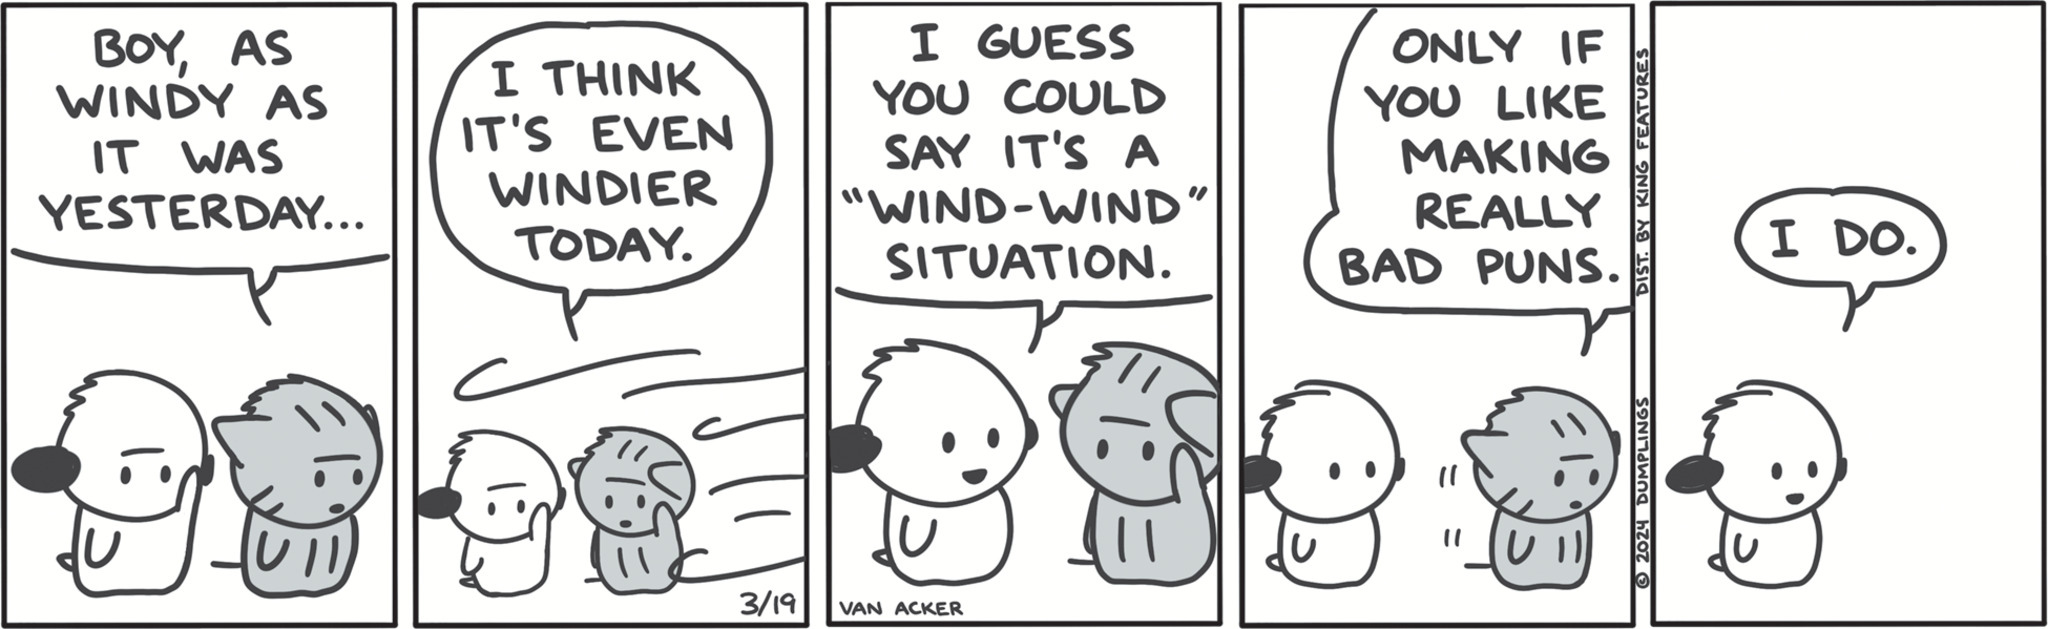 Wind WInd situation.jpeg